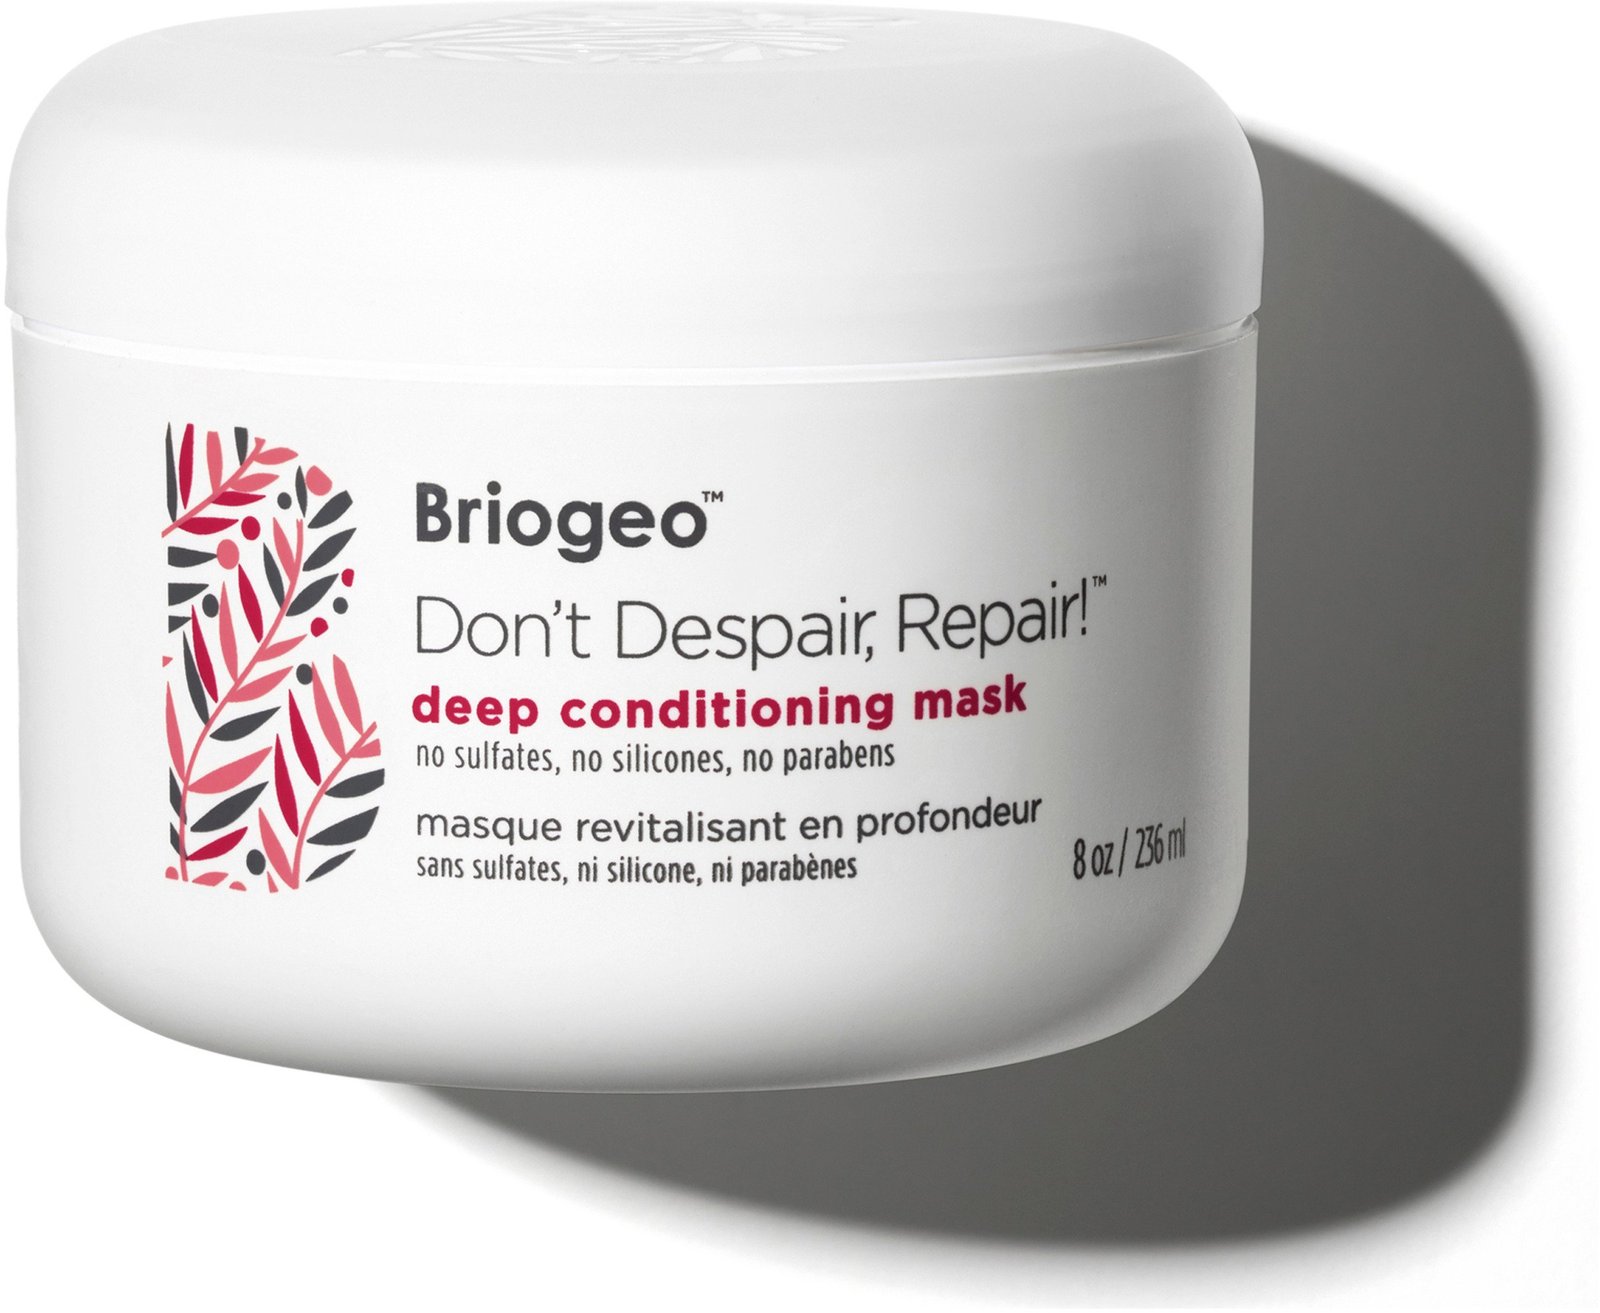 Briogeo Don't Despair Repair! Deep Conditioning Mask 236 ml